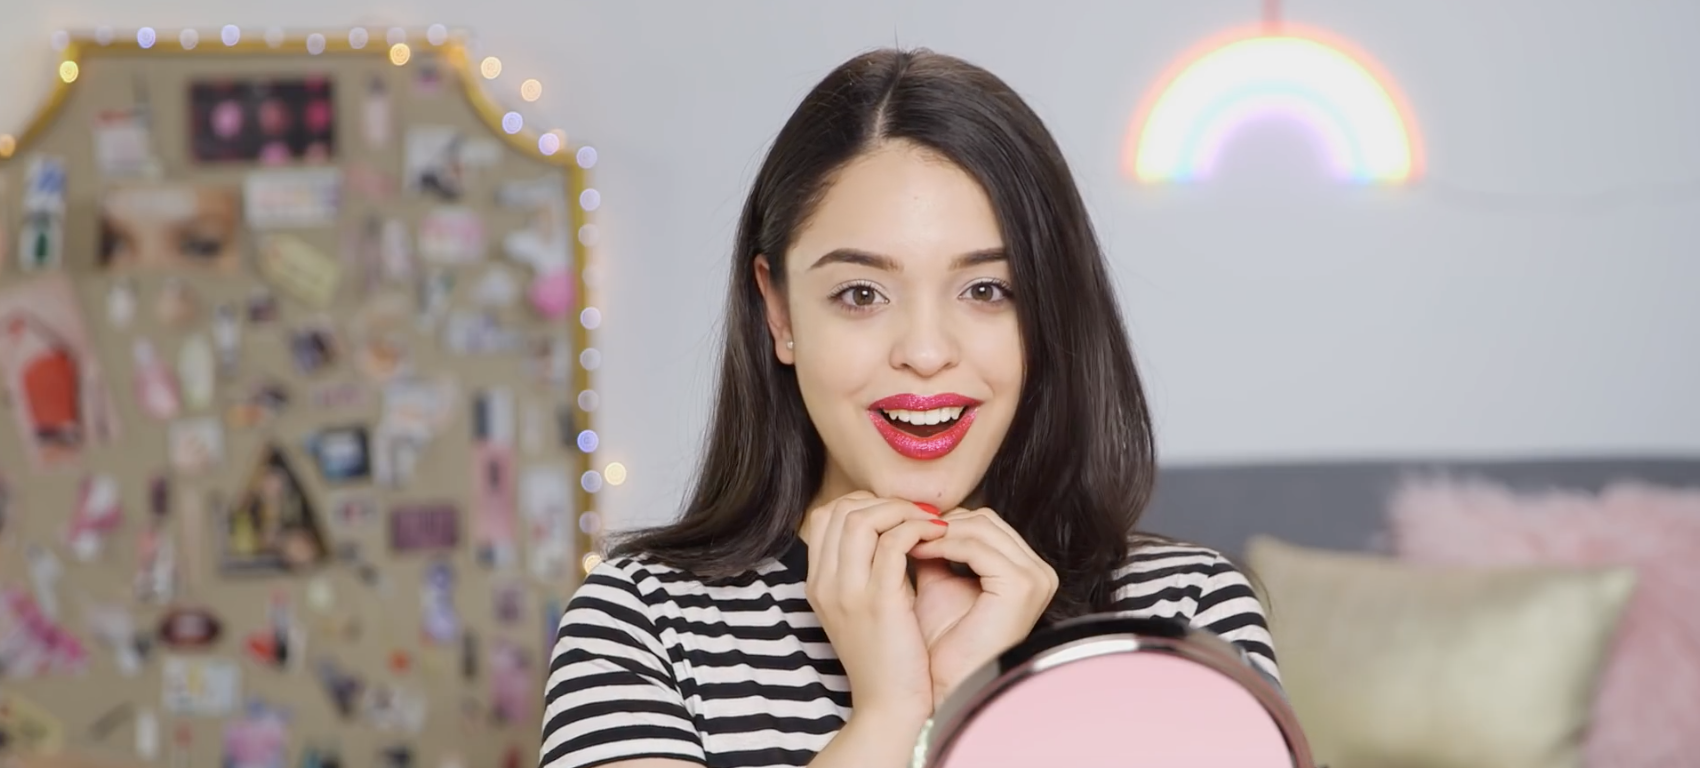 How To Apply Glitter Lip Gloss Video And Steps Glitter Lip Tutorial